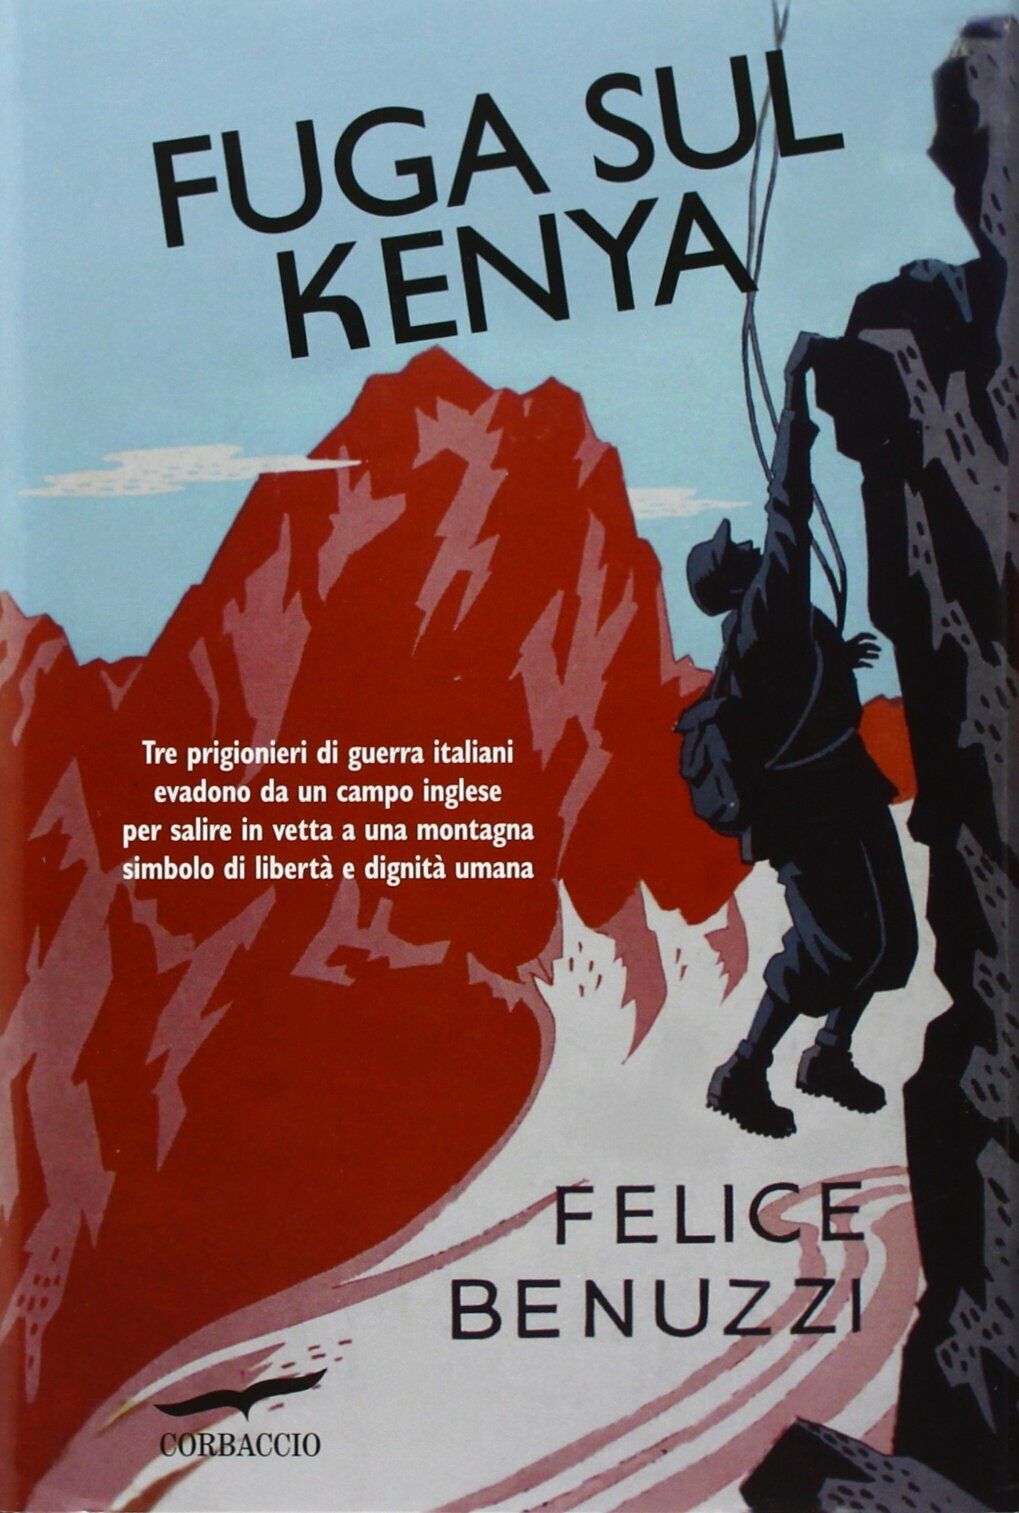 Fuga sul Kenya - Felice Benuzzi - Corbaccio, 2012